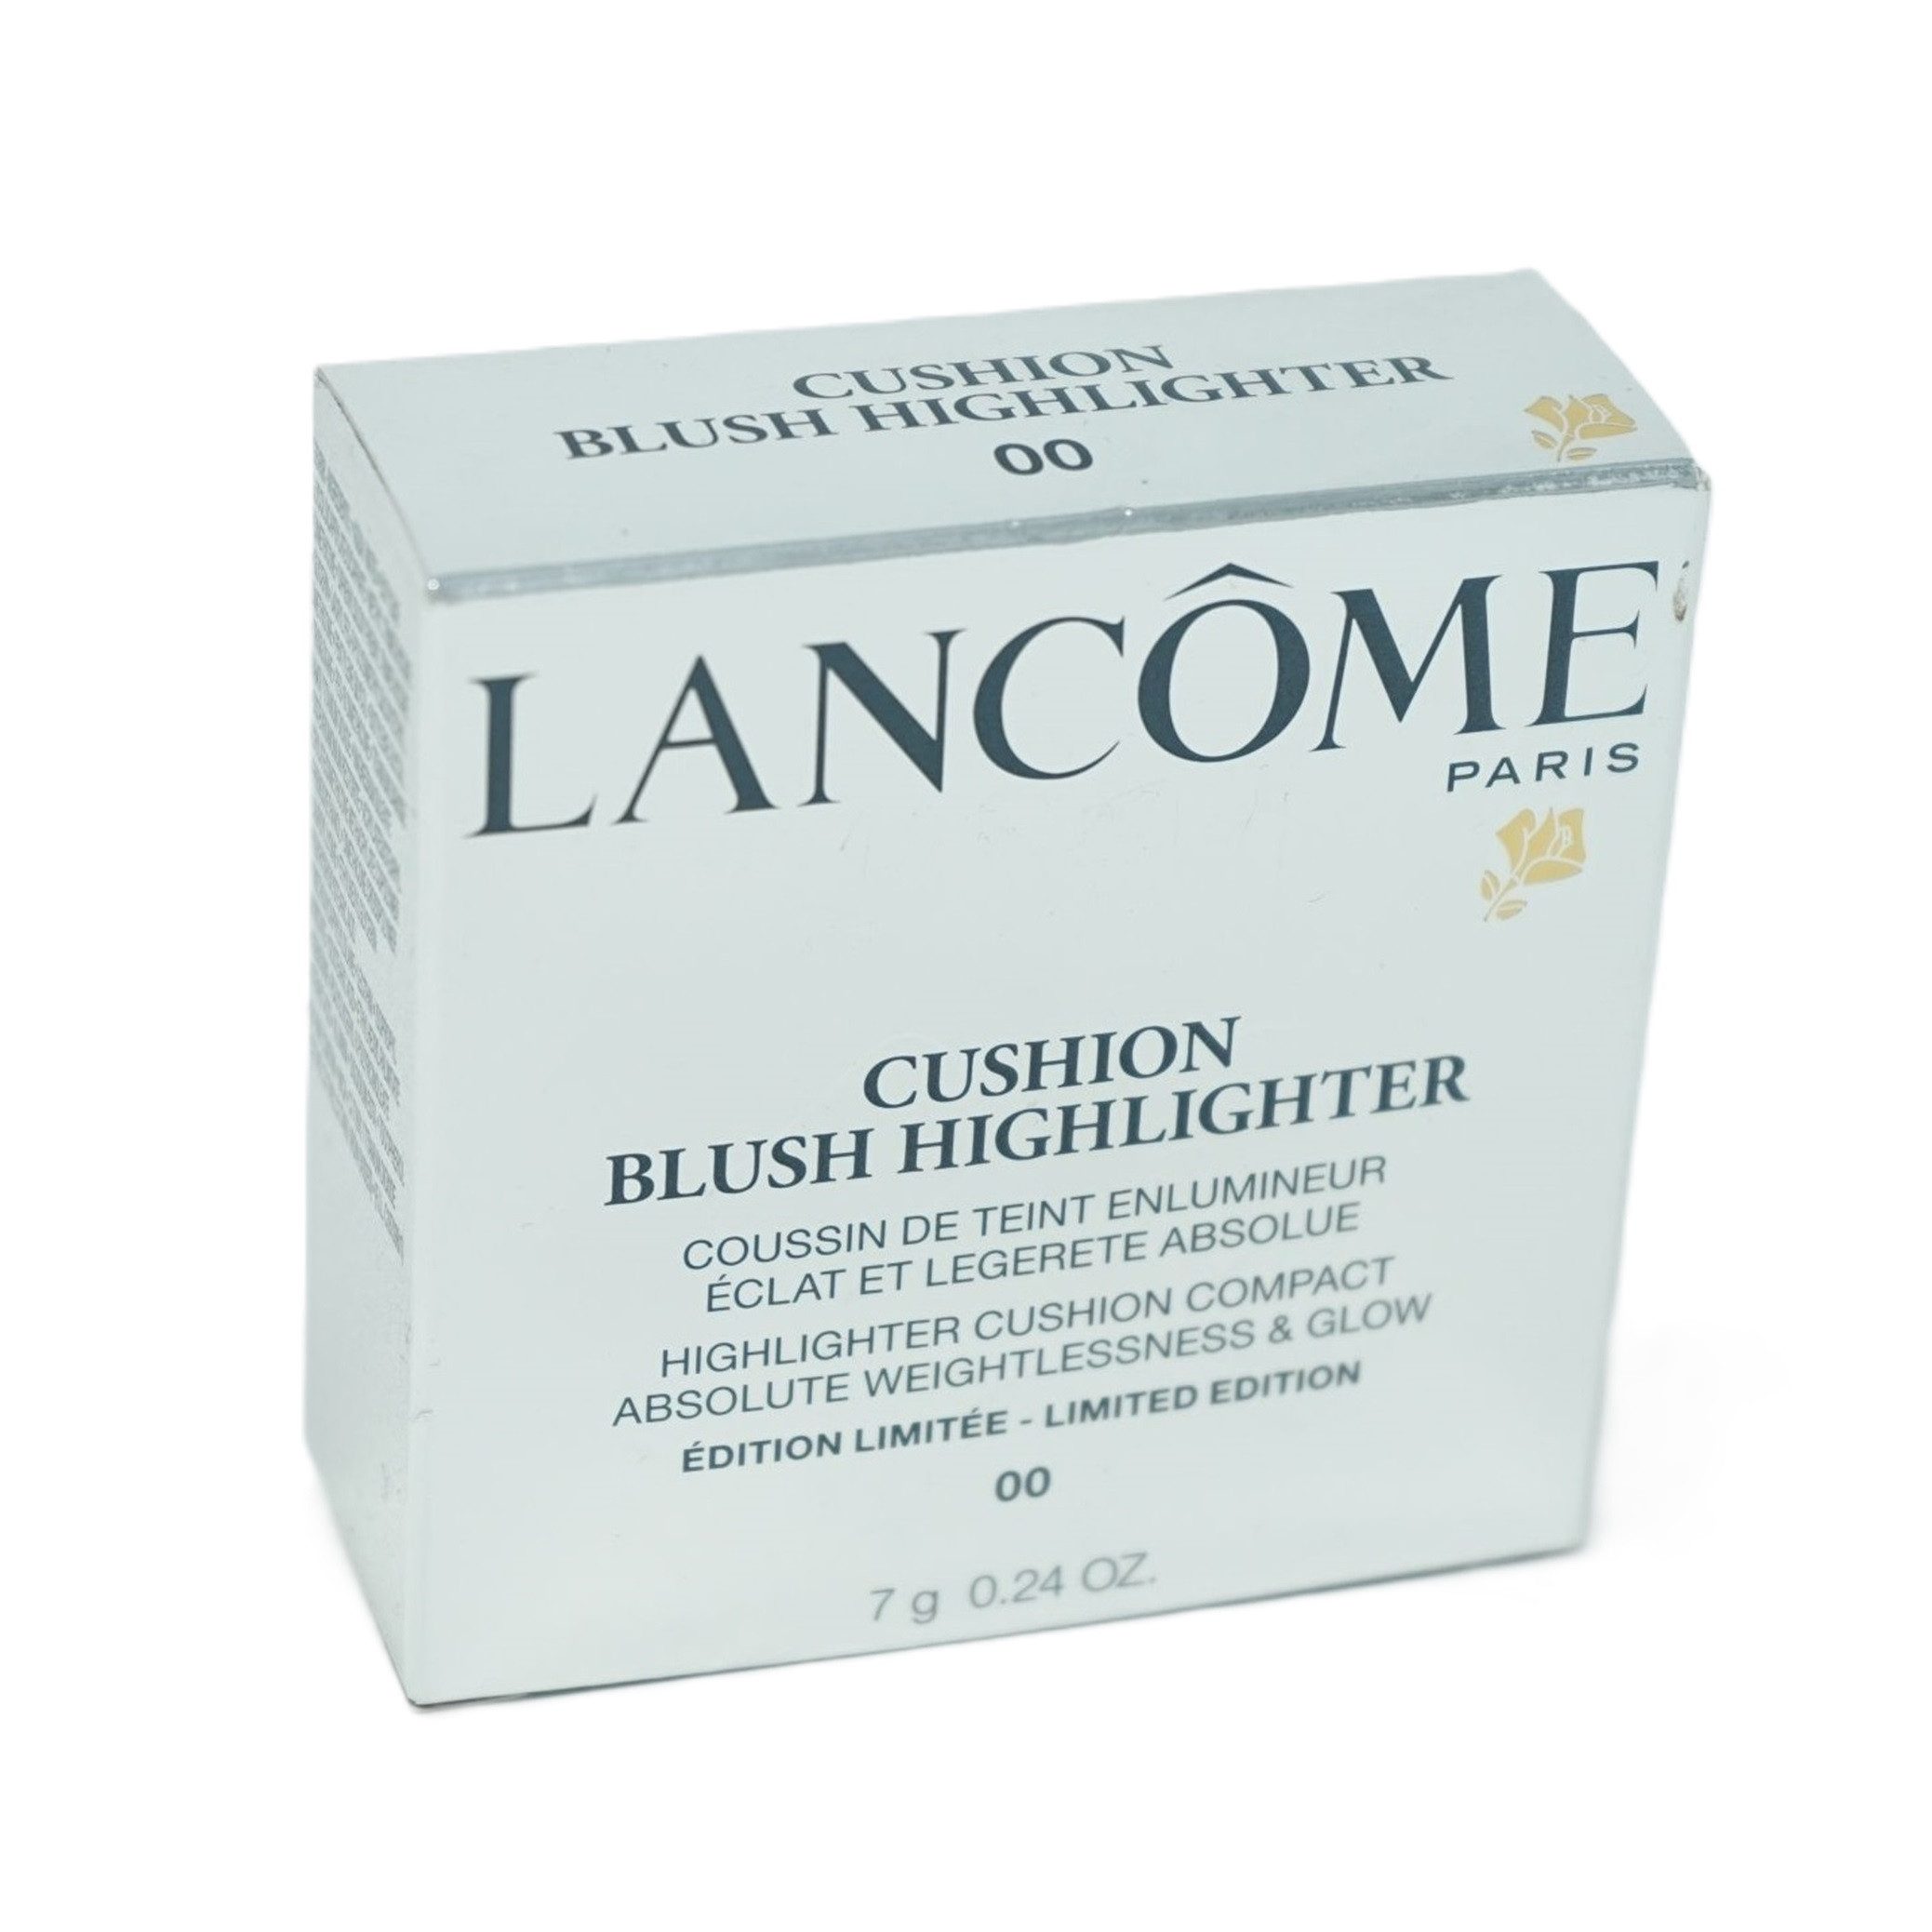 LANCOME Lidschatten-Palette Lancome Cushion Blush Highlighter 00 Highlighter 7g